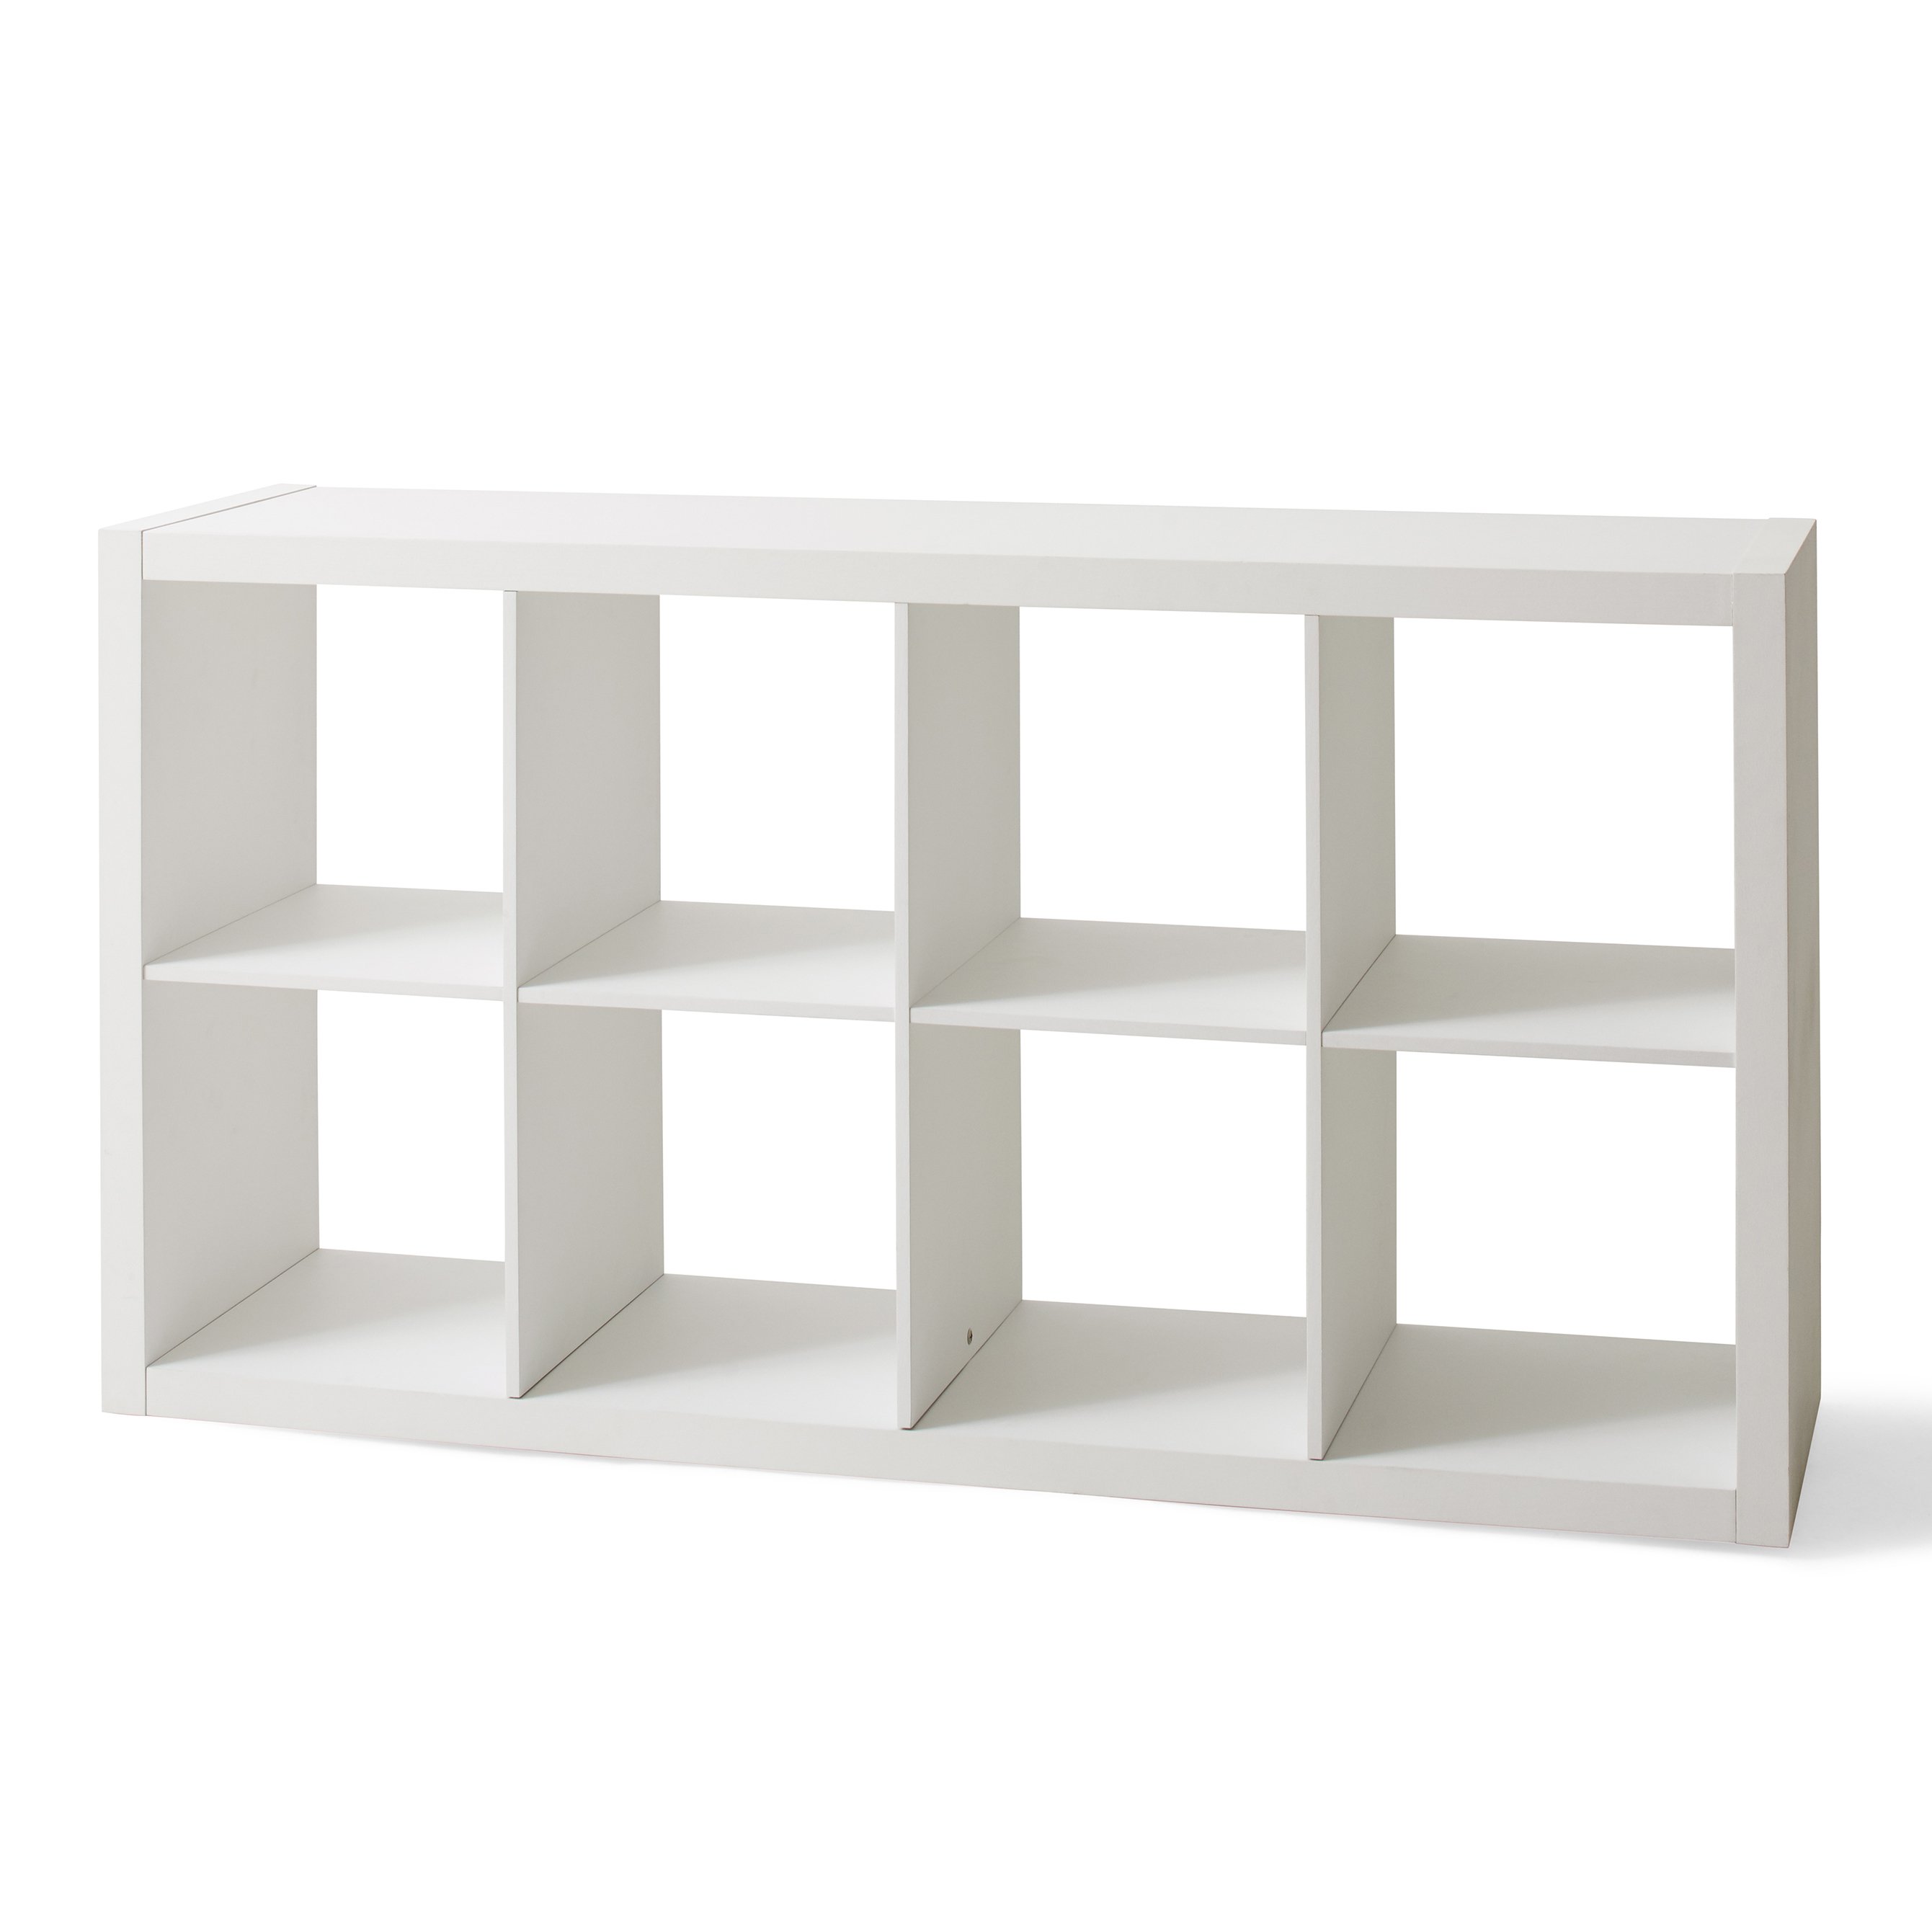 Better Homes & Gardens 8-Cube Storage Organizer, White Texture - image 5 of 10